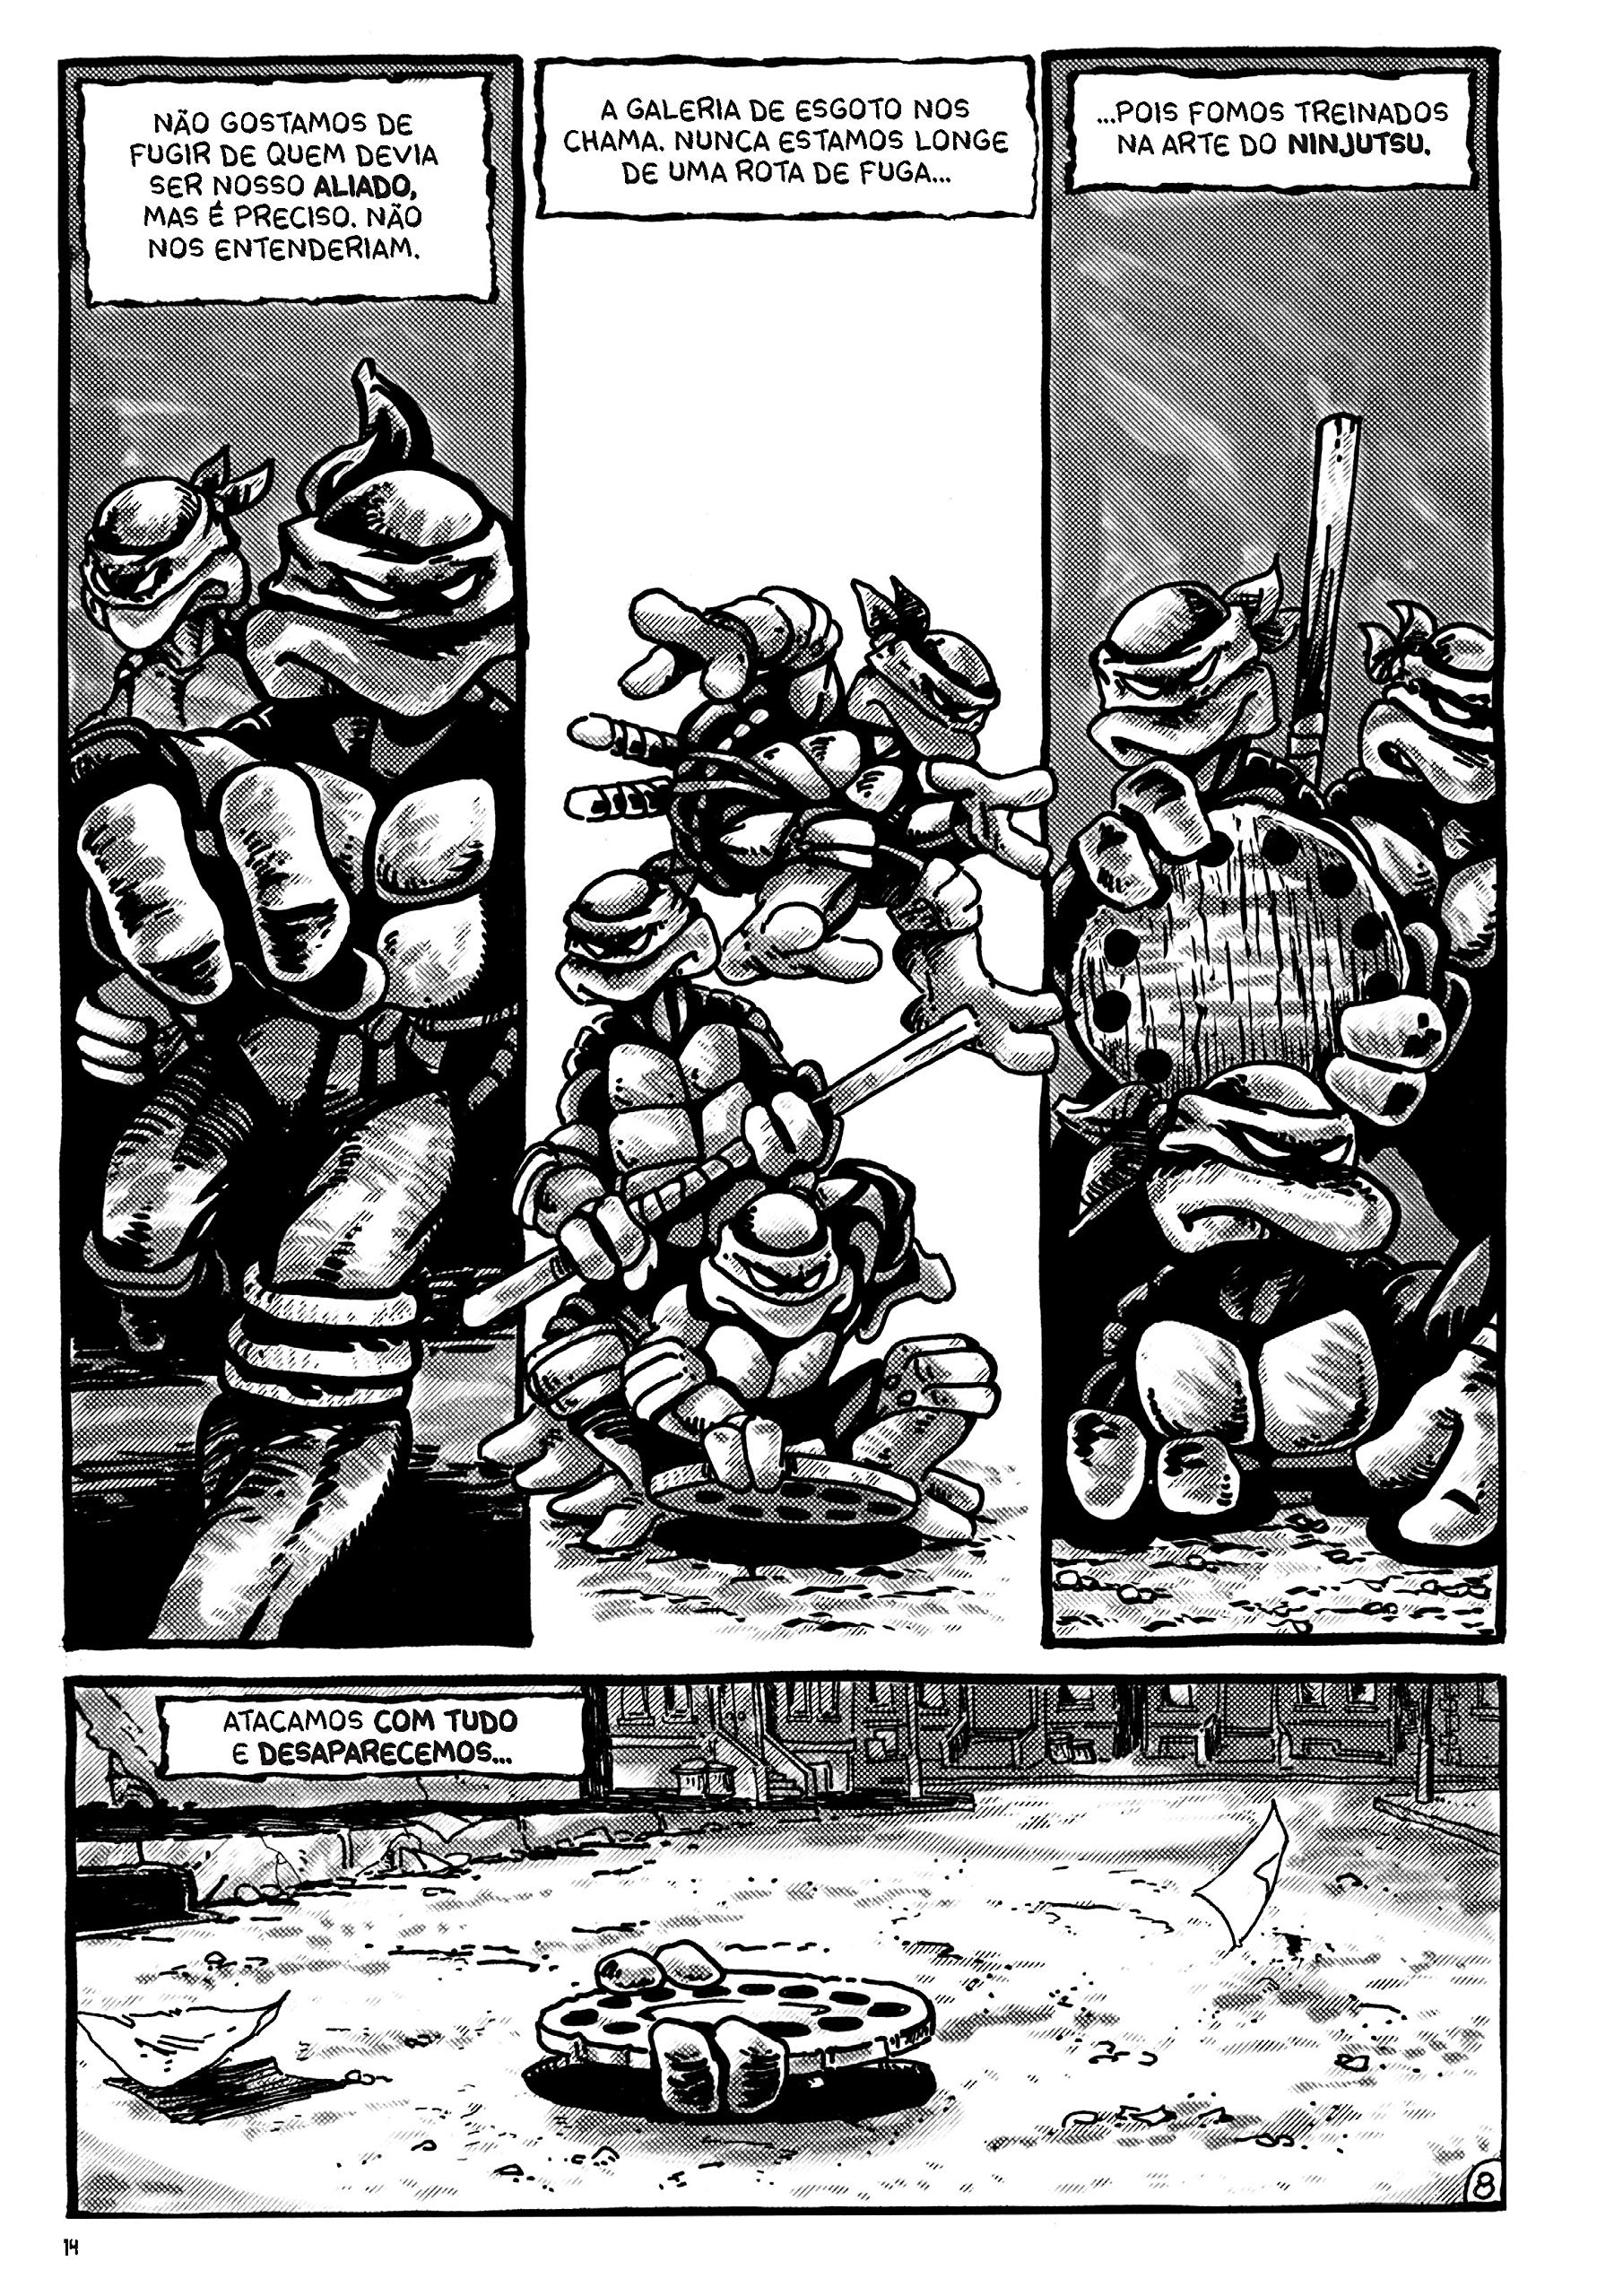  Comics: Resenha: As Tartarugas Ninja – Volume 1